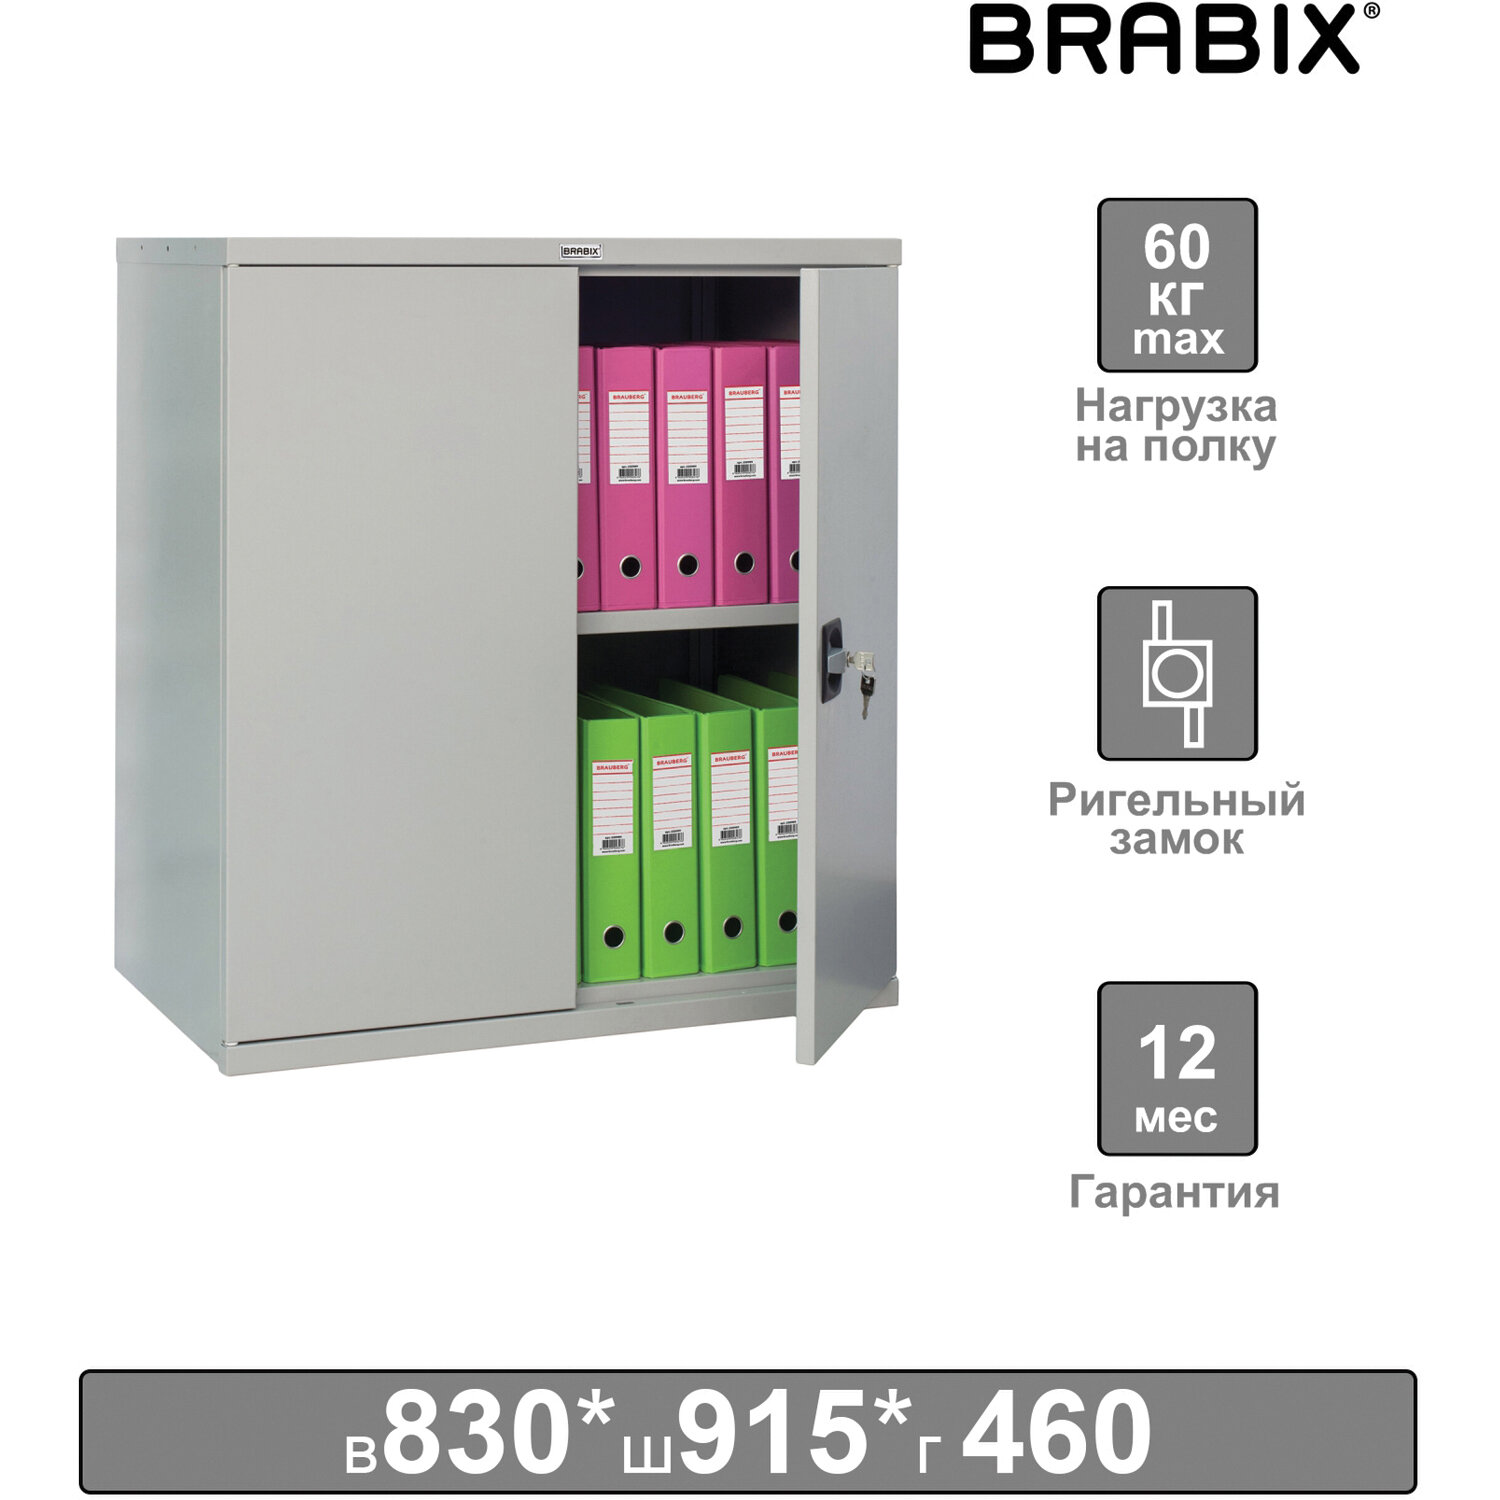 Brabix Шкаф металлический (антресоль) BRABIX MK 08/46, 830х915х460 мм, 24 кг, 1 полка, разборный, 291137, S204BR080102